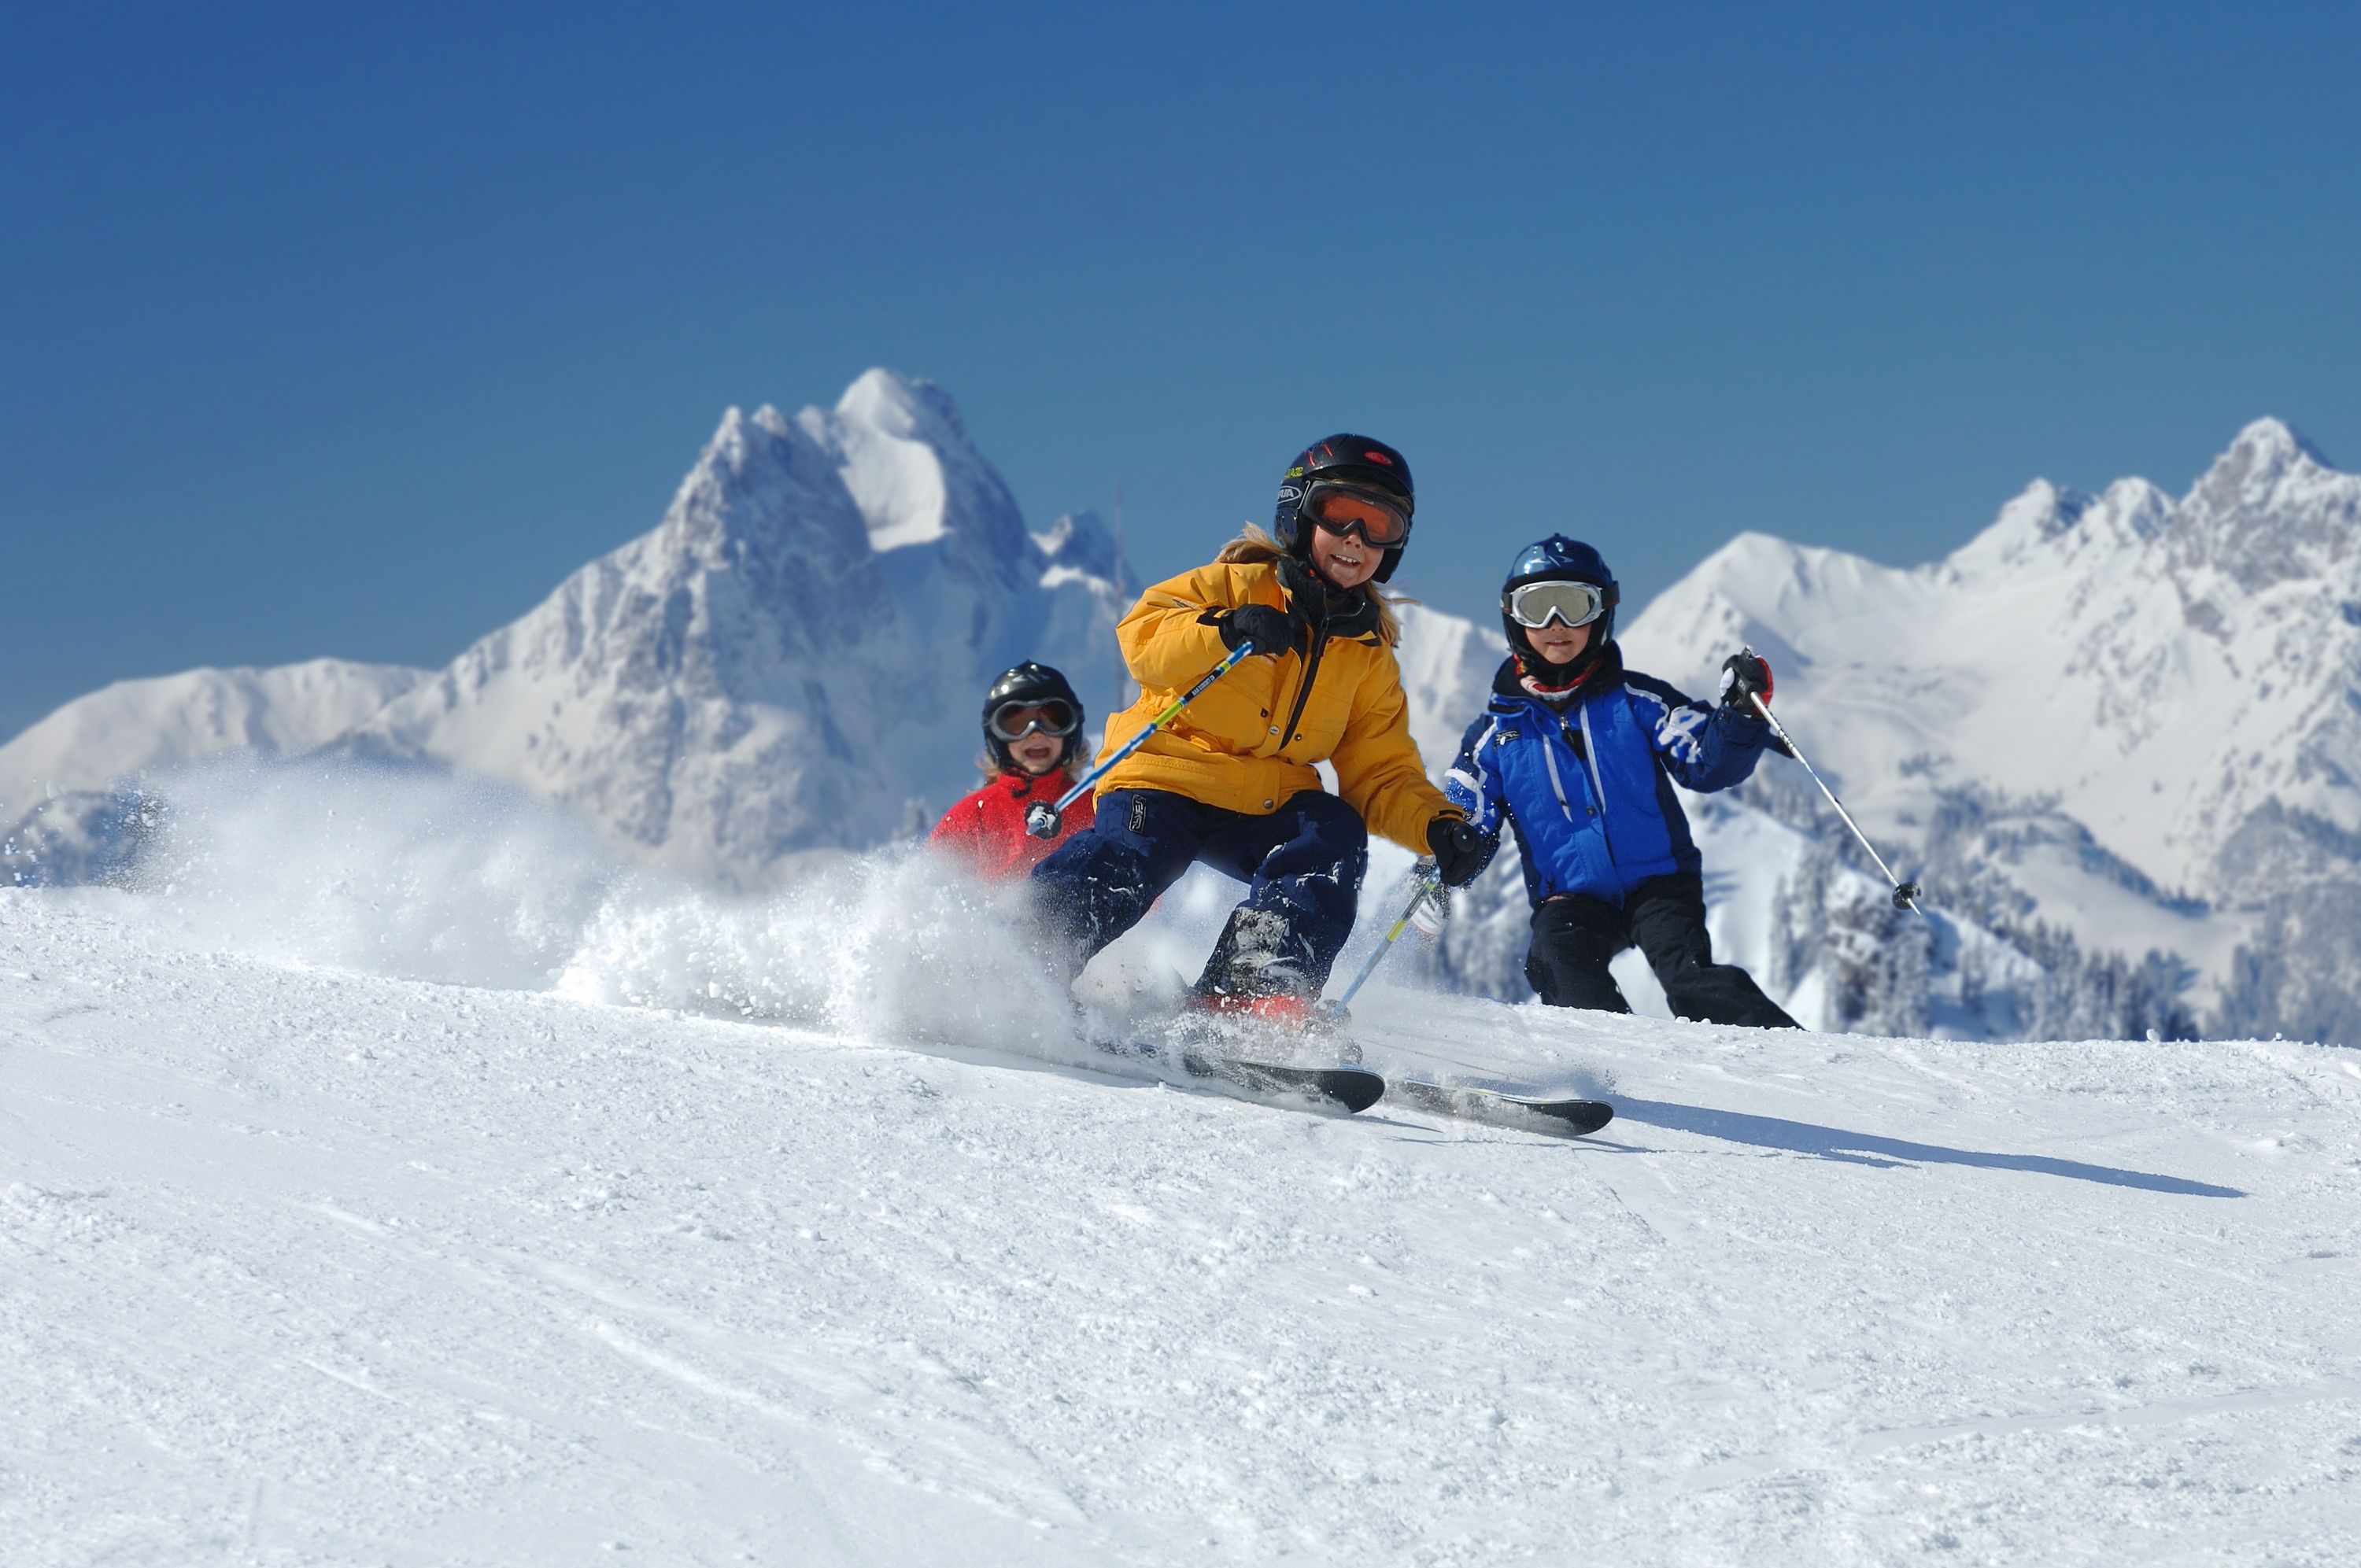 My friend skis. Домбай горнолыжный курорт. Домбай лыжники. Горнолыжный спорт Домбай. Домбай горнолыжный курорт для детей.